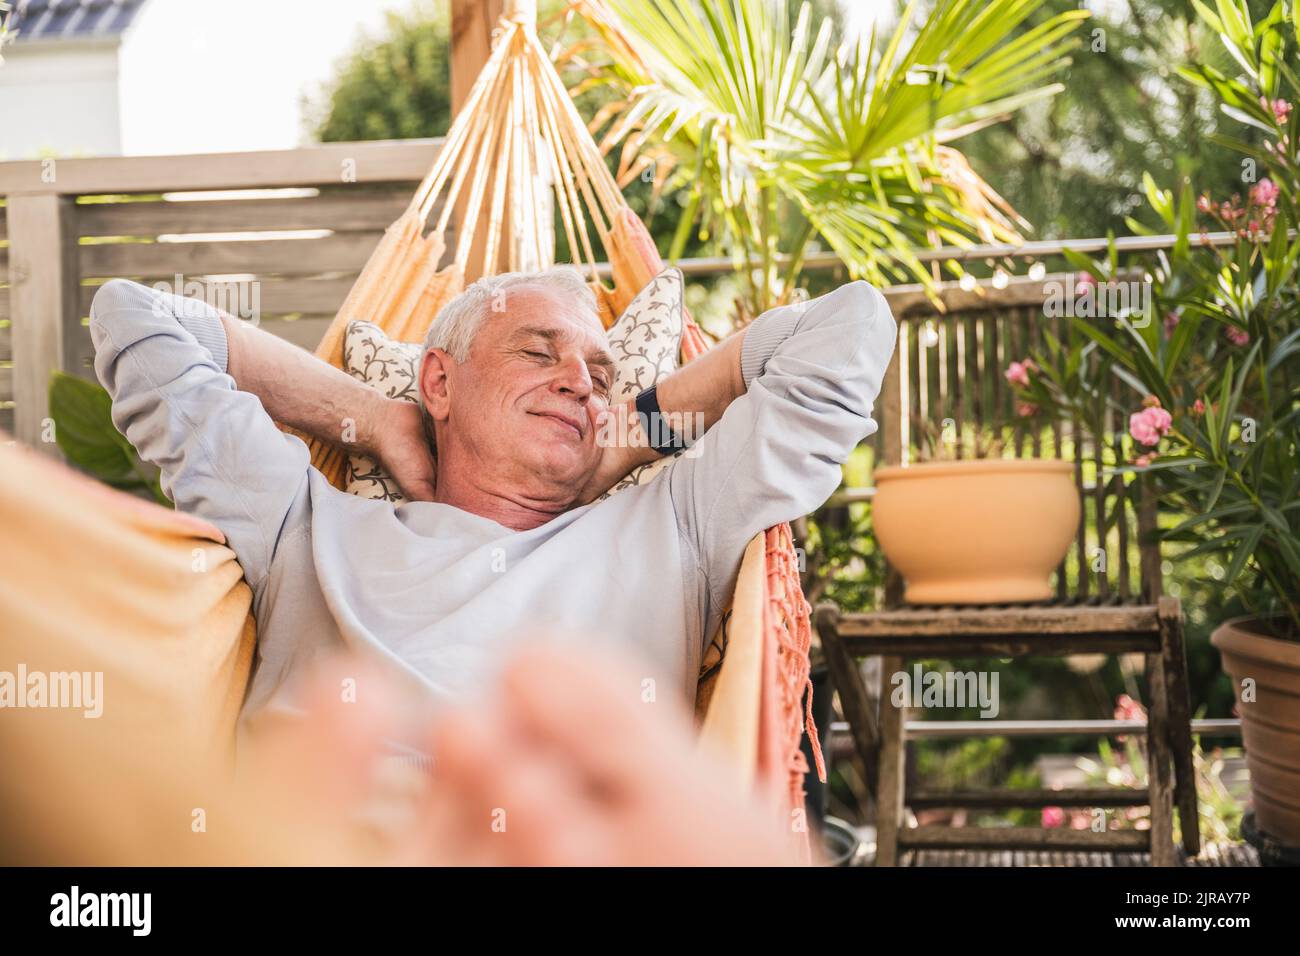 Senior man napping in hammock Stock Photo